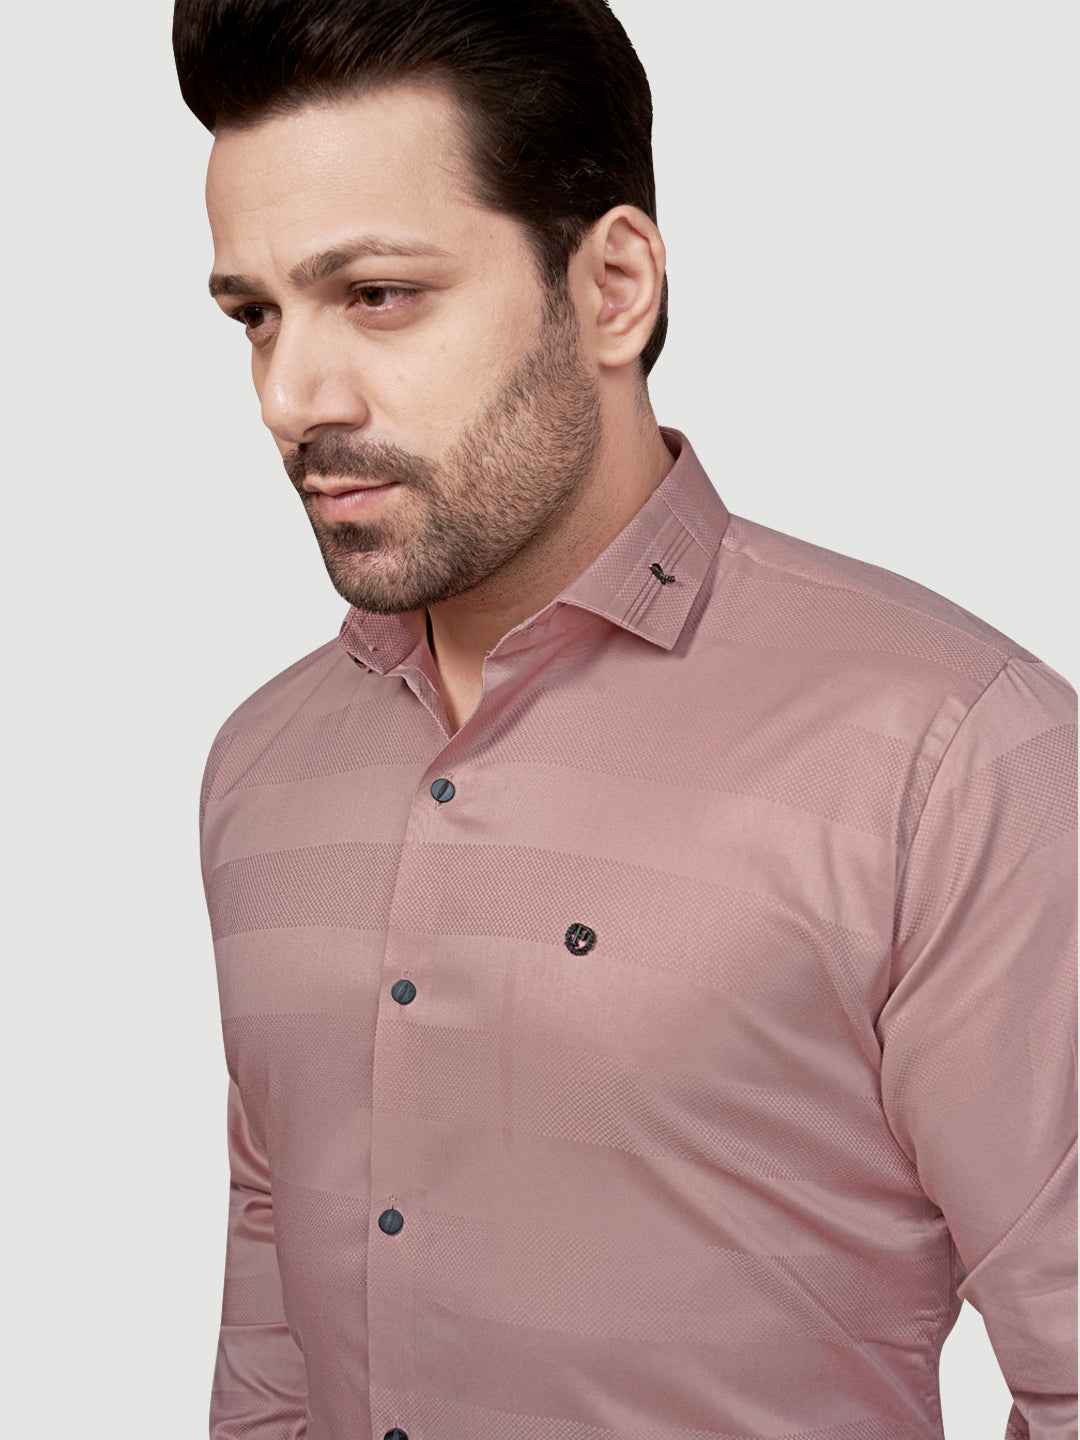 Black and White Men's Designer Shirt with Collar Accessory & Designer Broach Peach